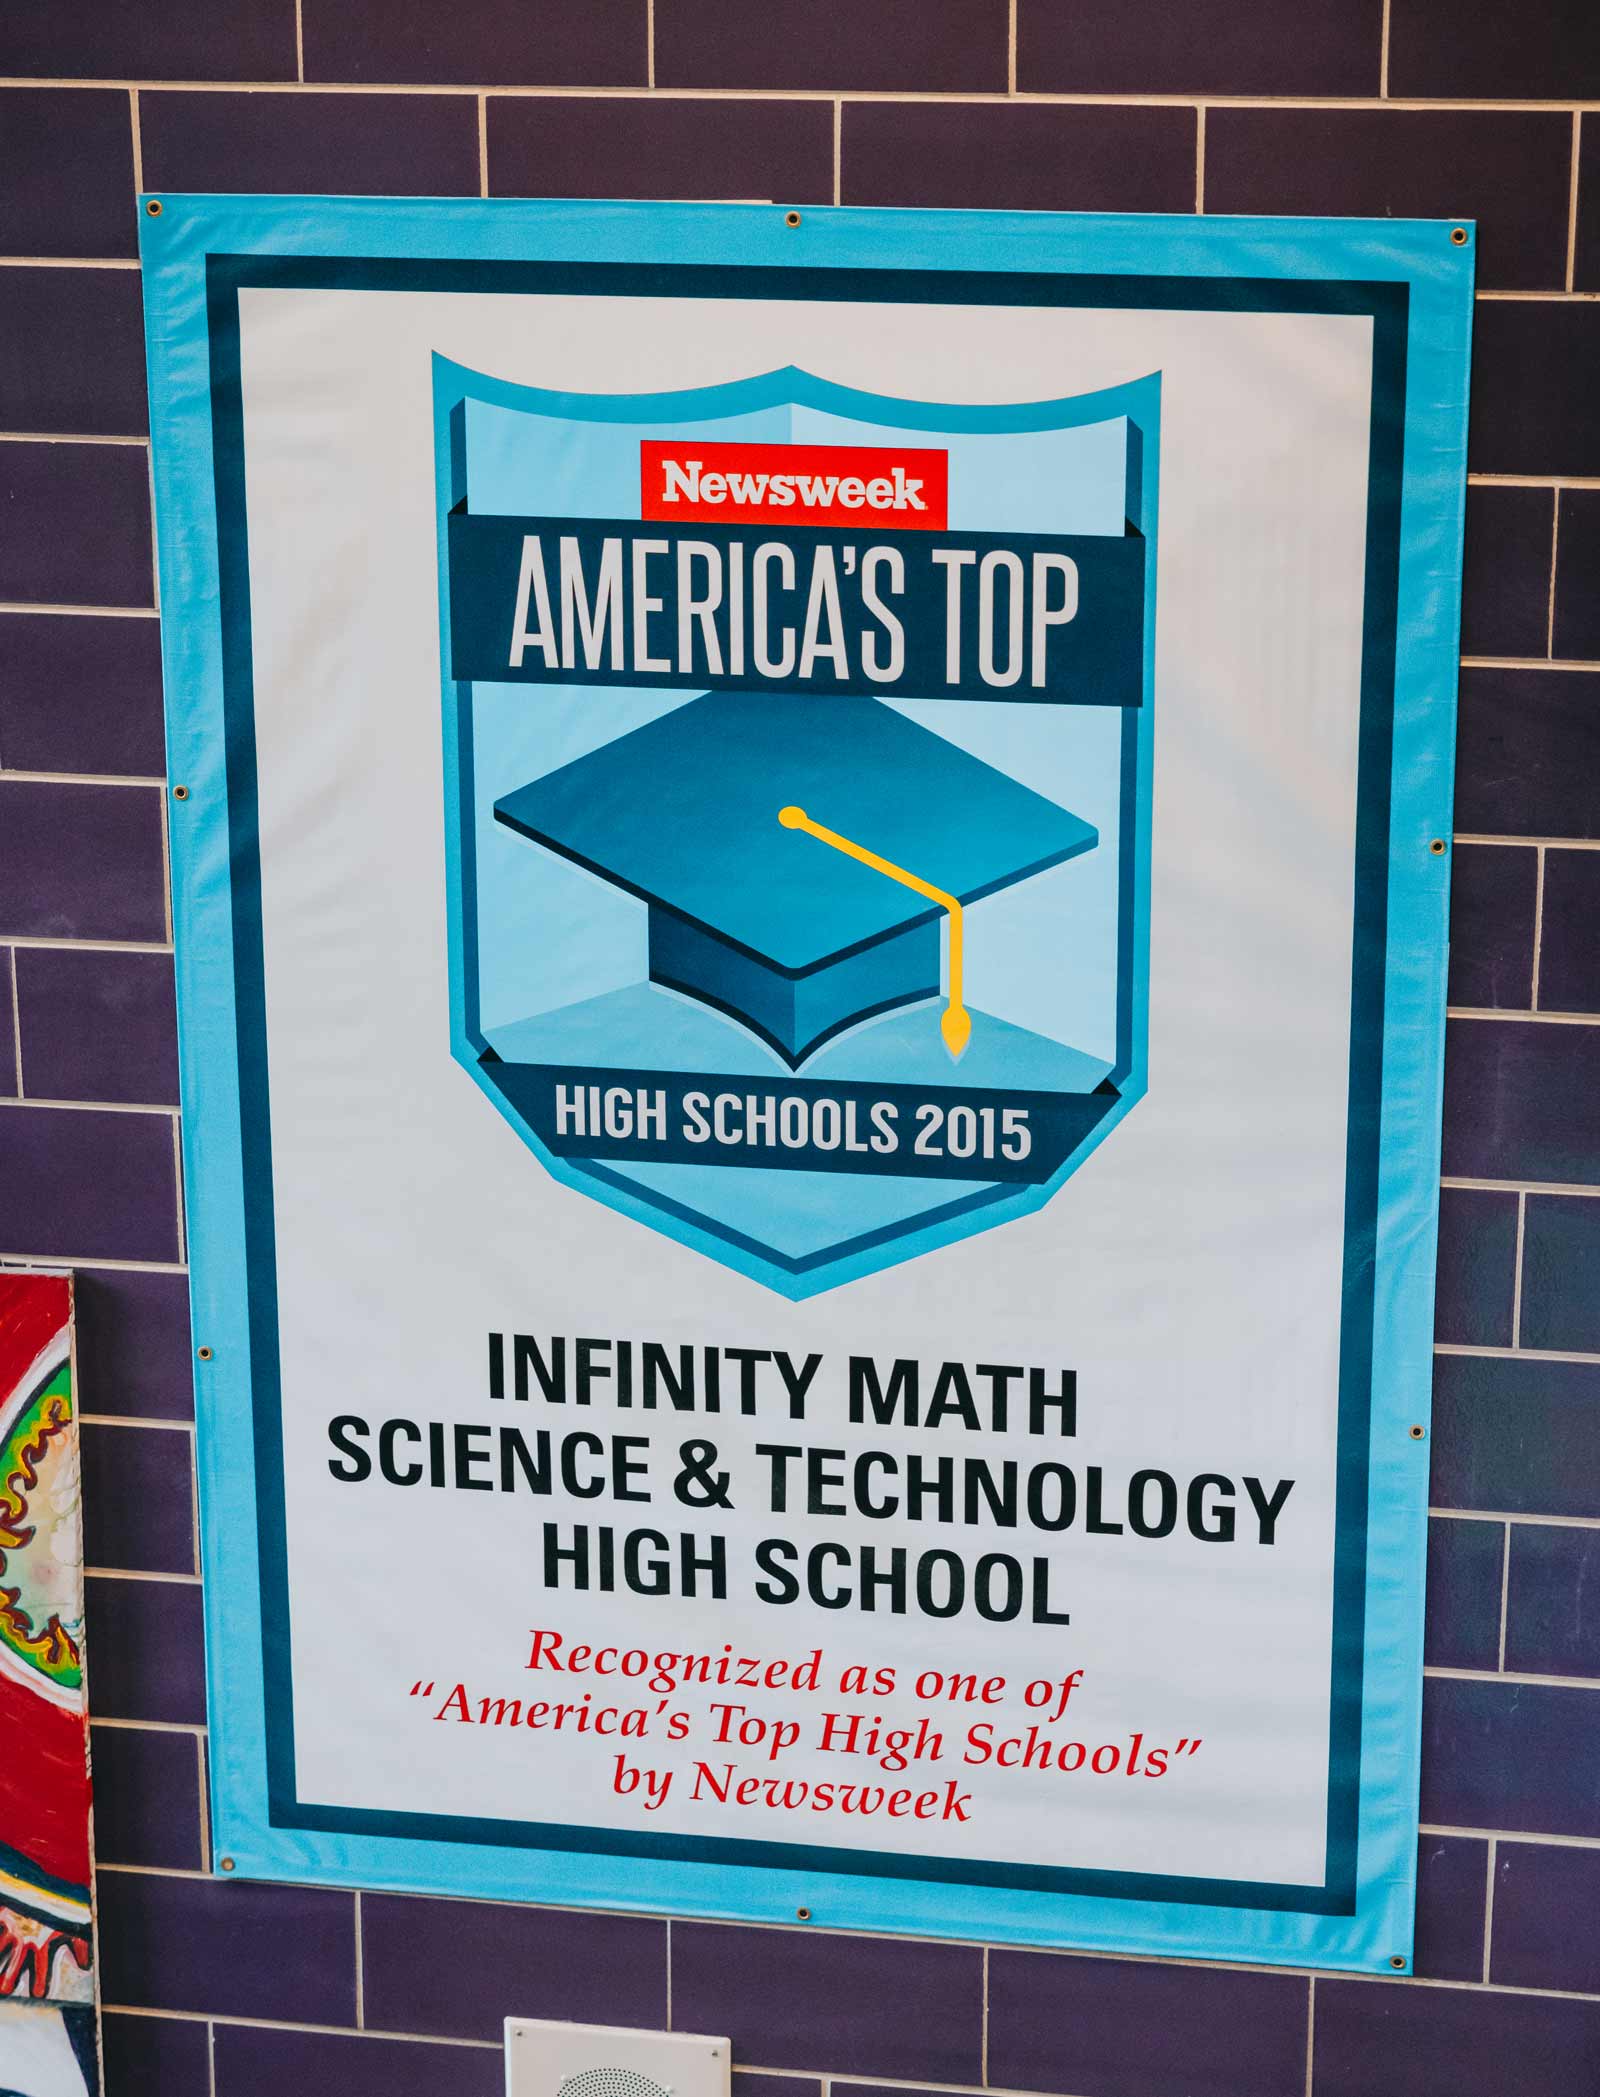 INFINITY Math, Science, & Technology High School